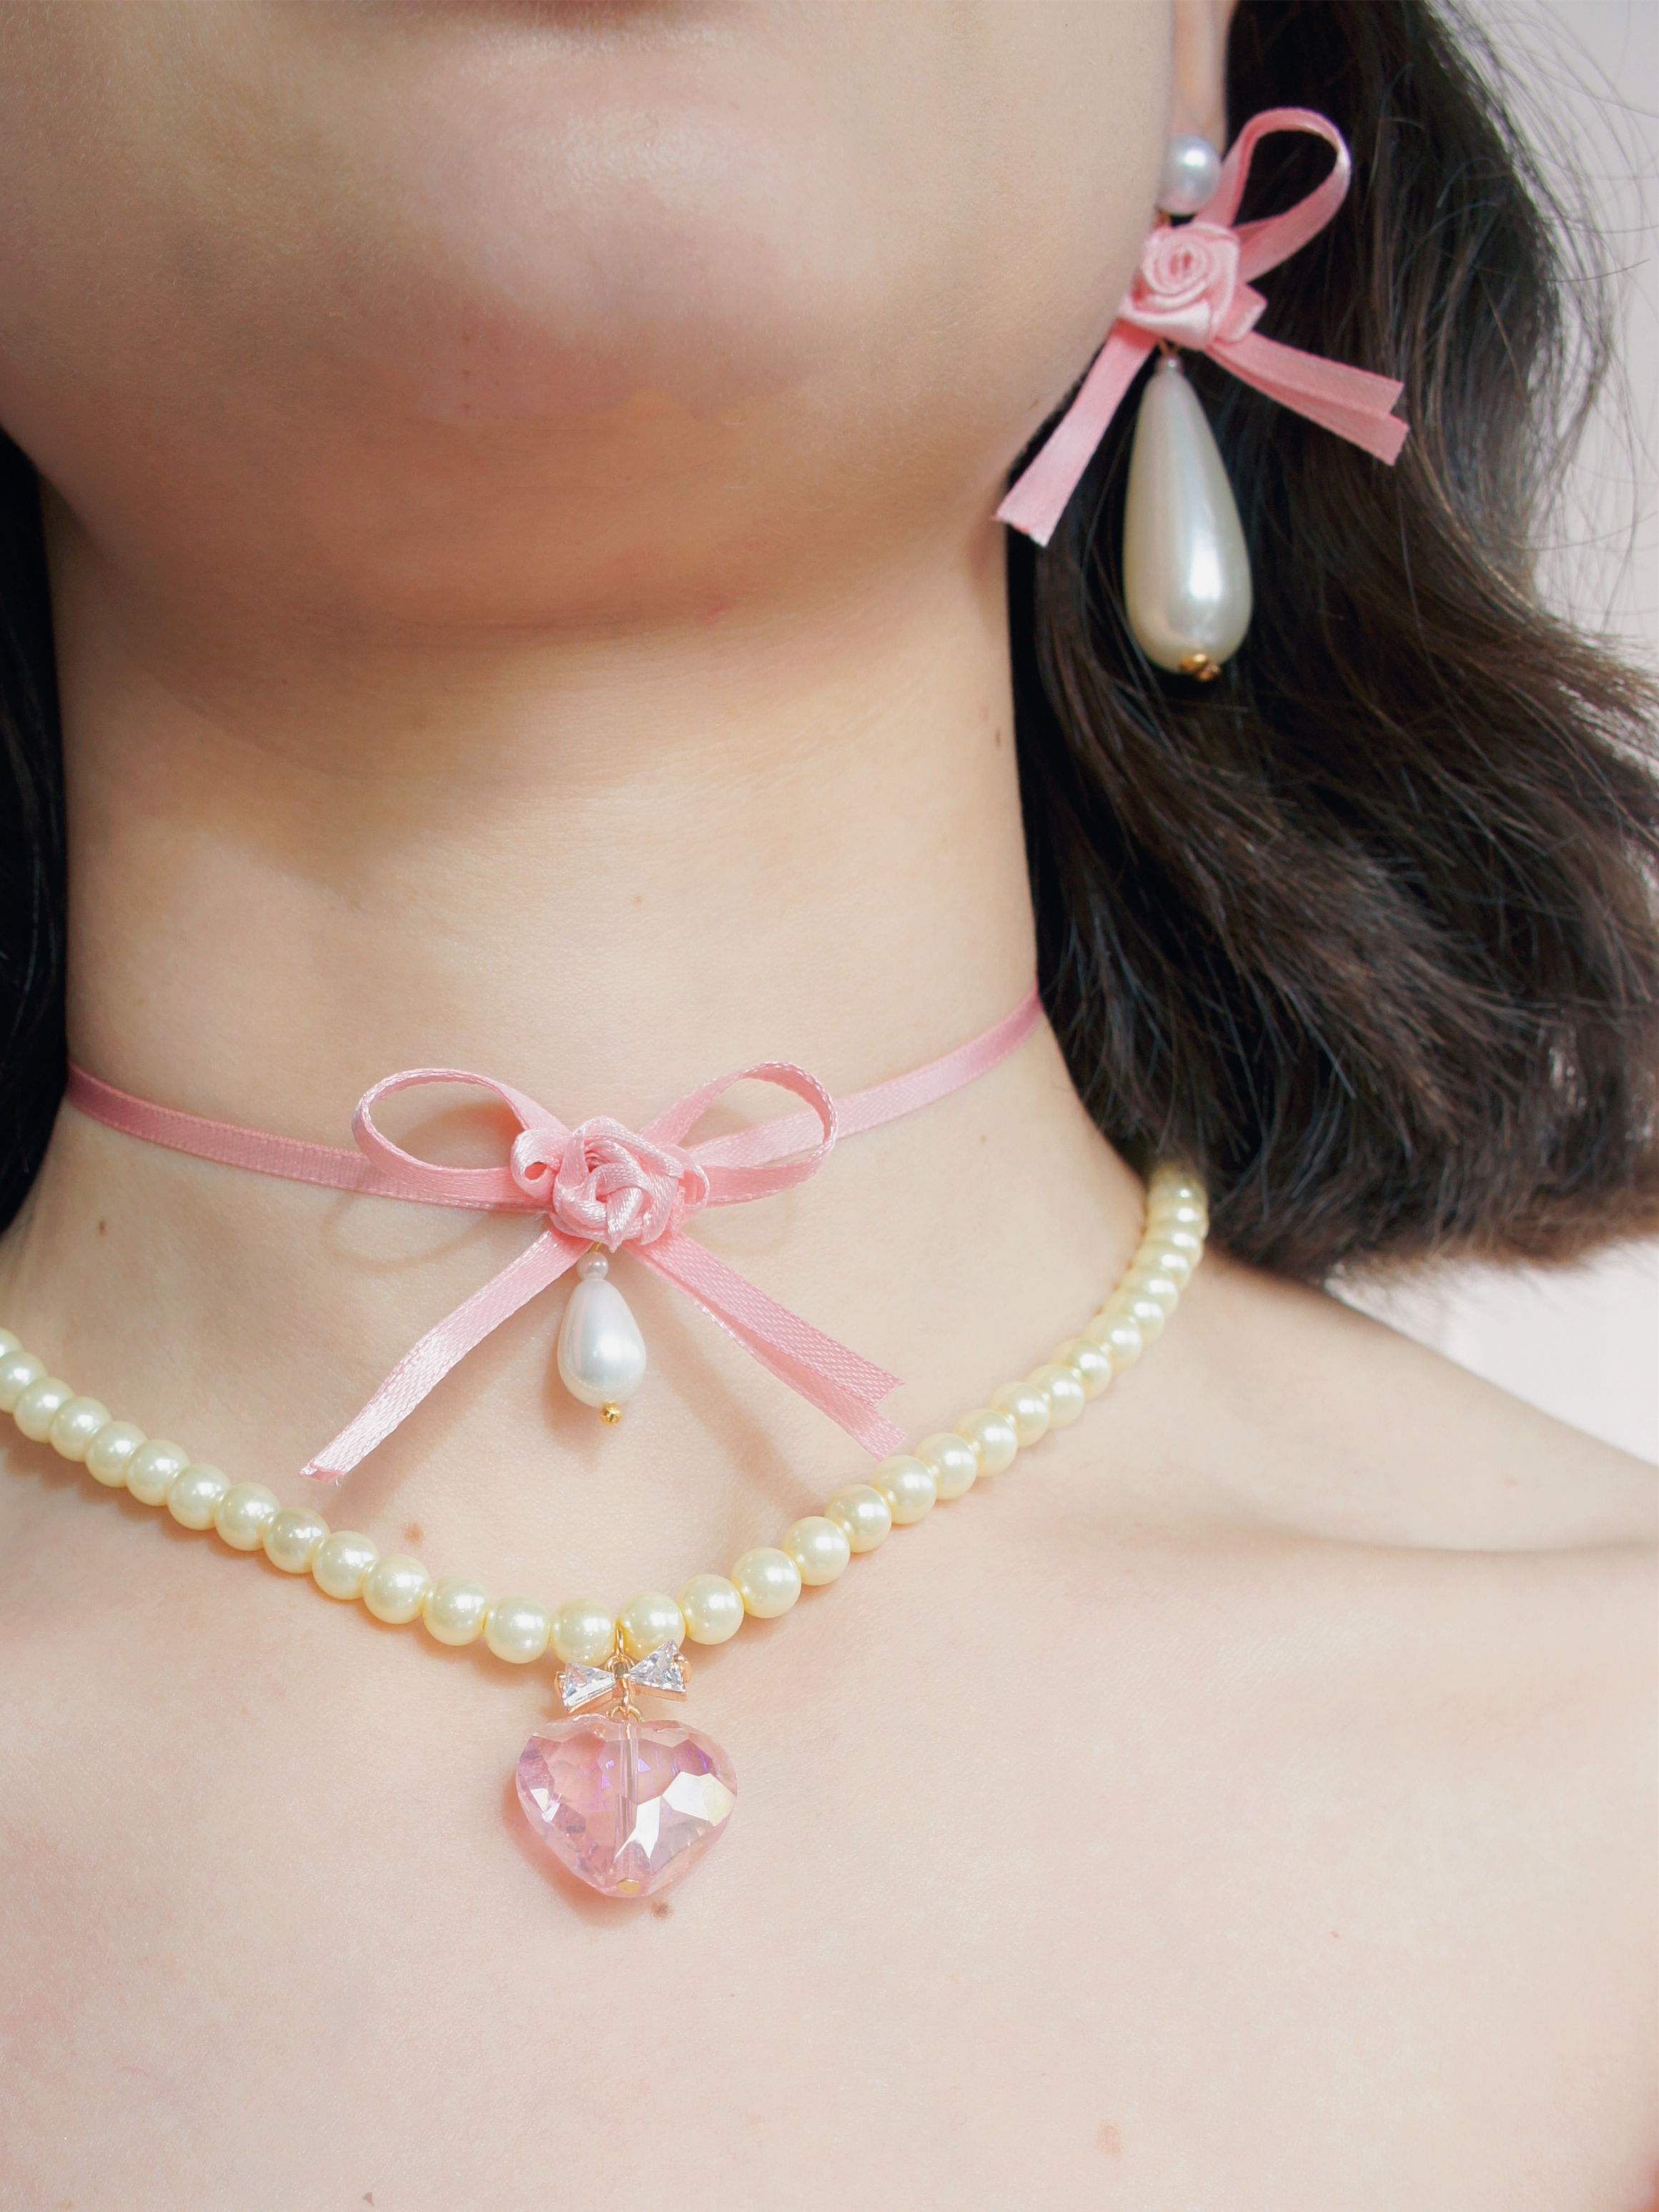 Ballerina Satin Ribbon Bow Flower Choker with Pearl Pendant, Length Adjustable